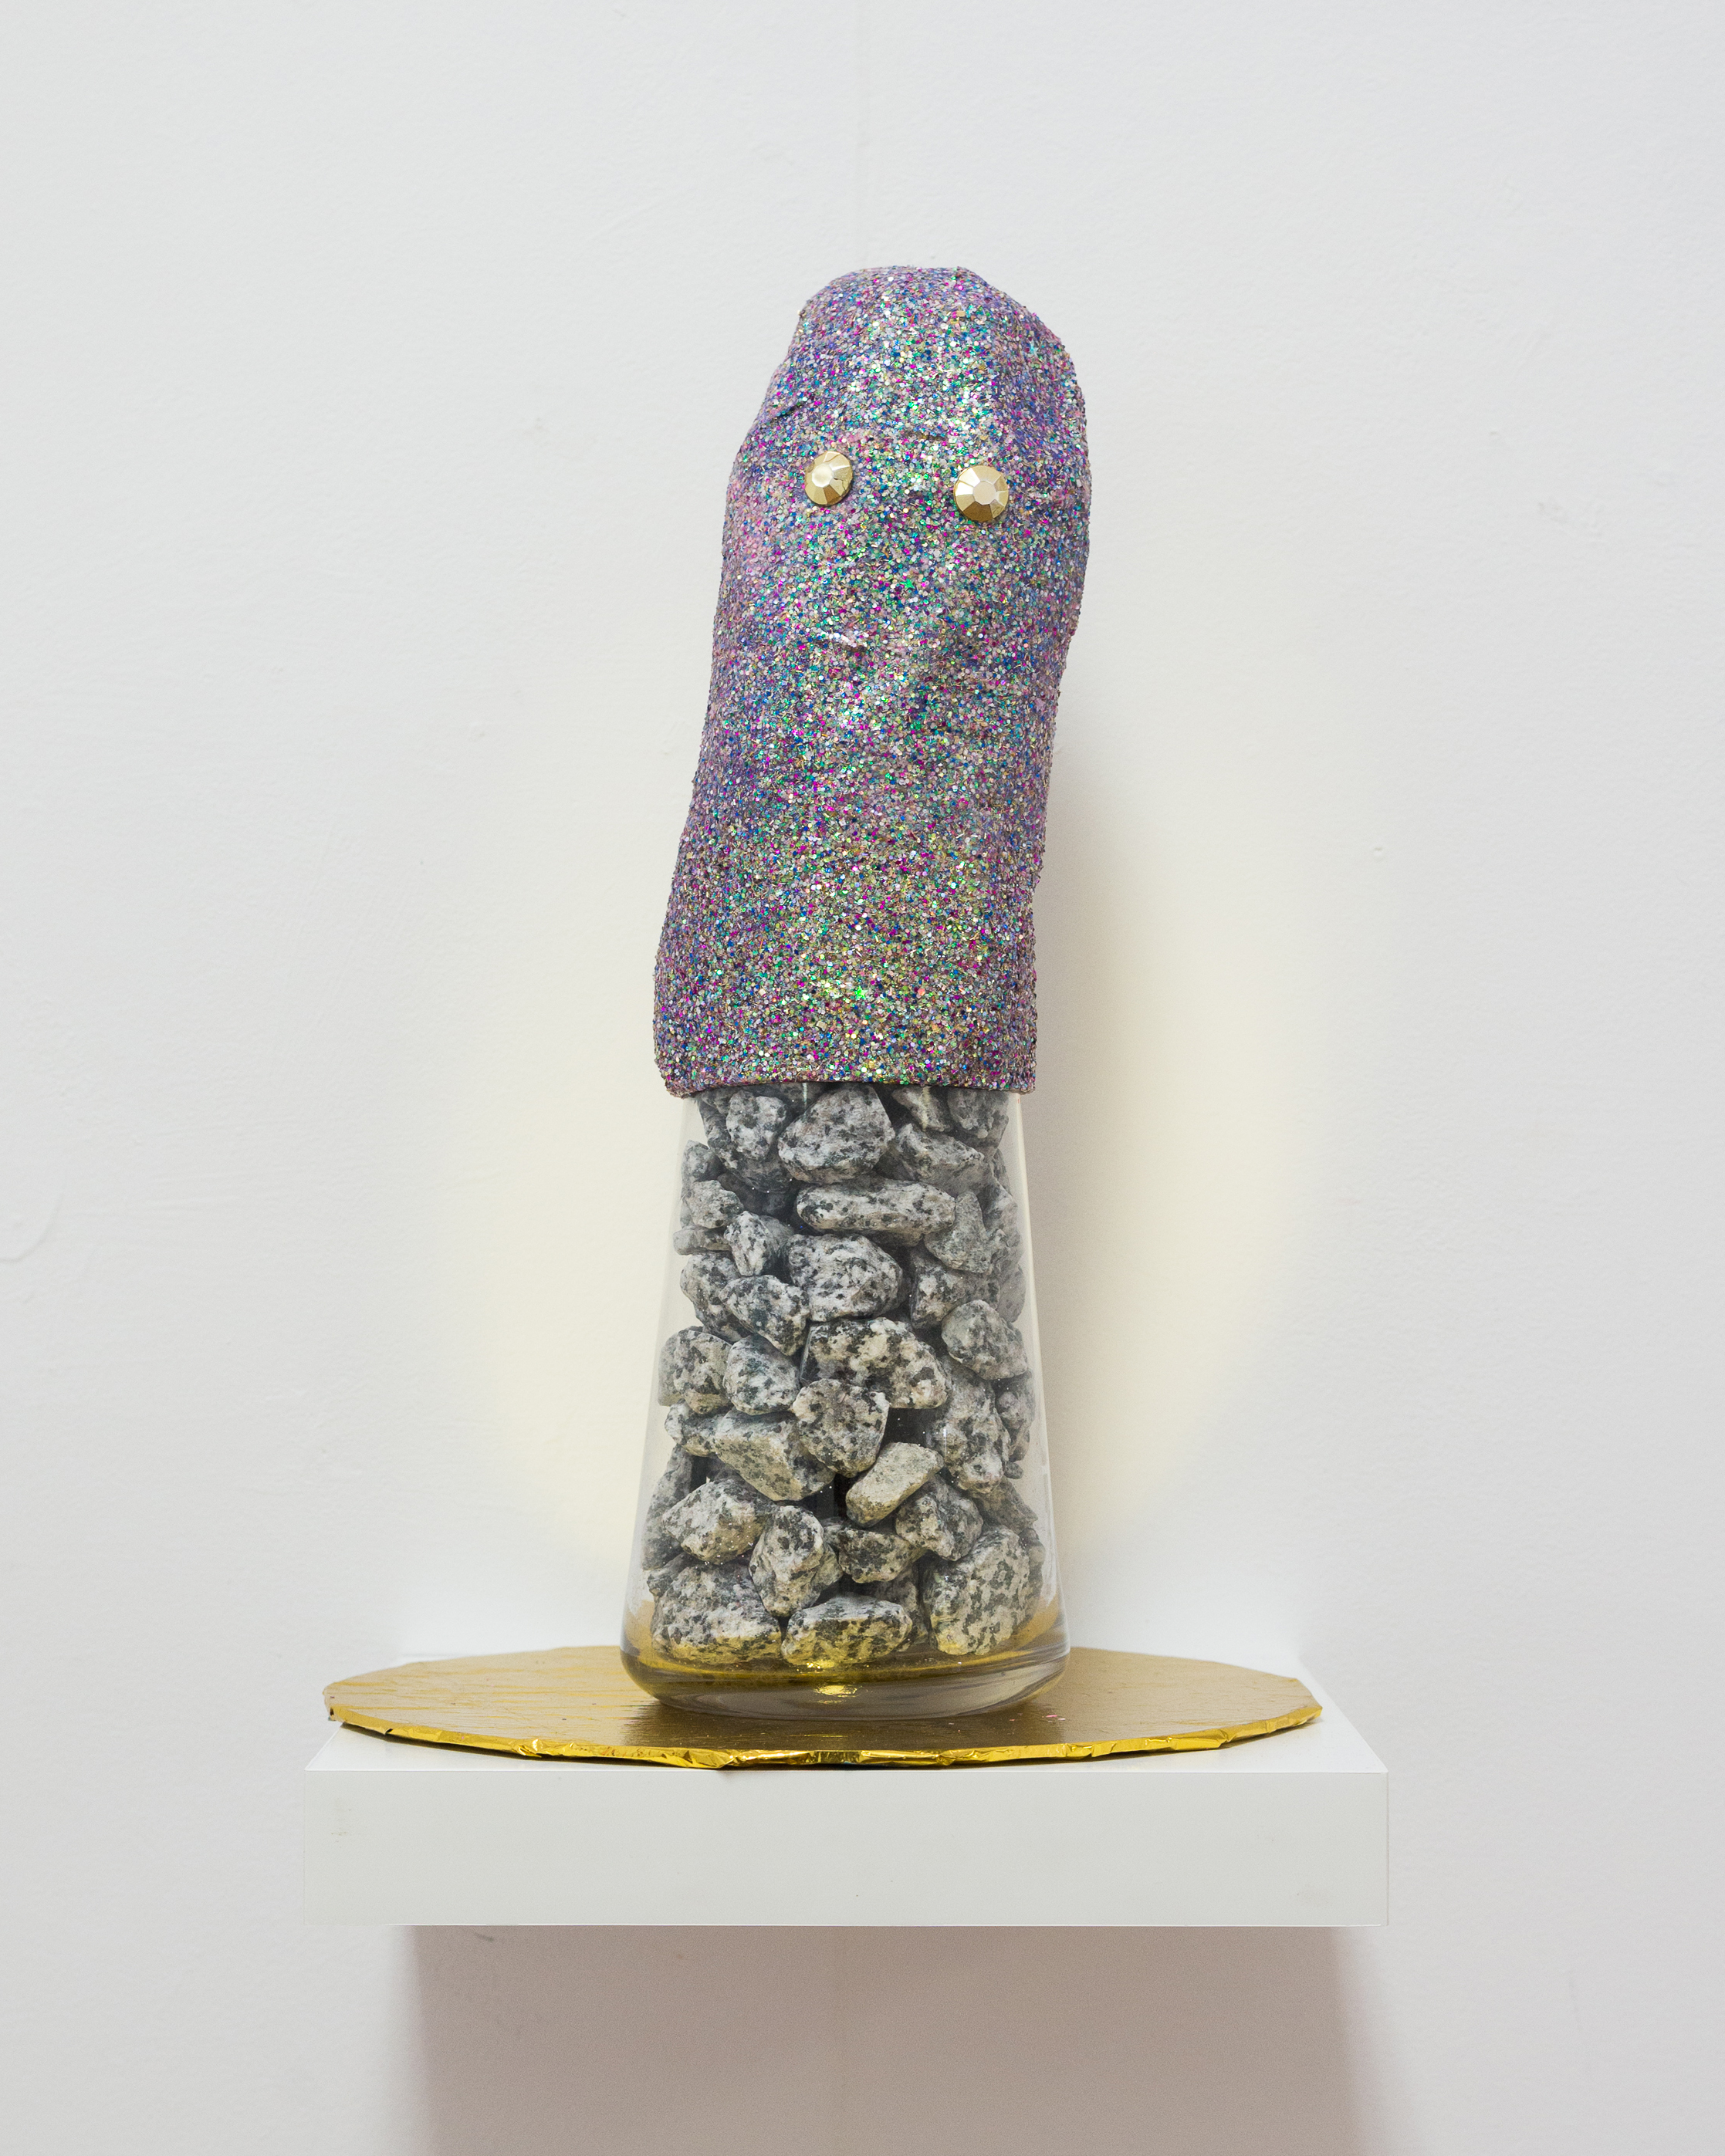   Ryan&nbsp;  Glass, granite, paper mache, glitter, plastic gems, MDF, mylar 